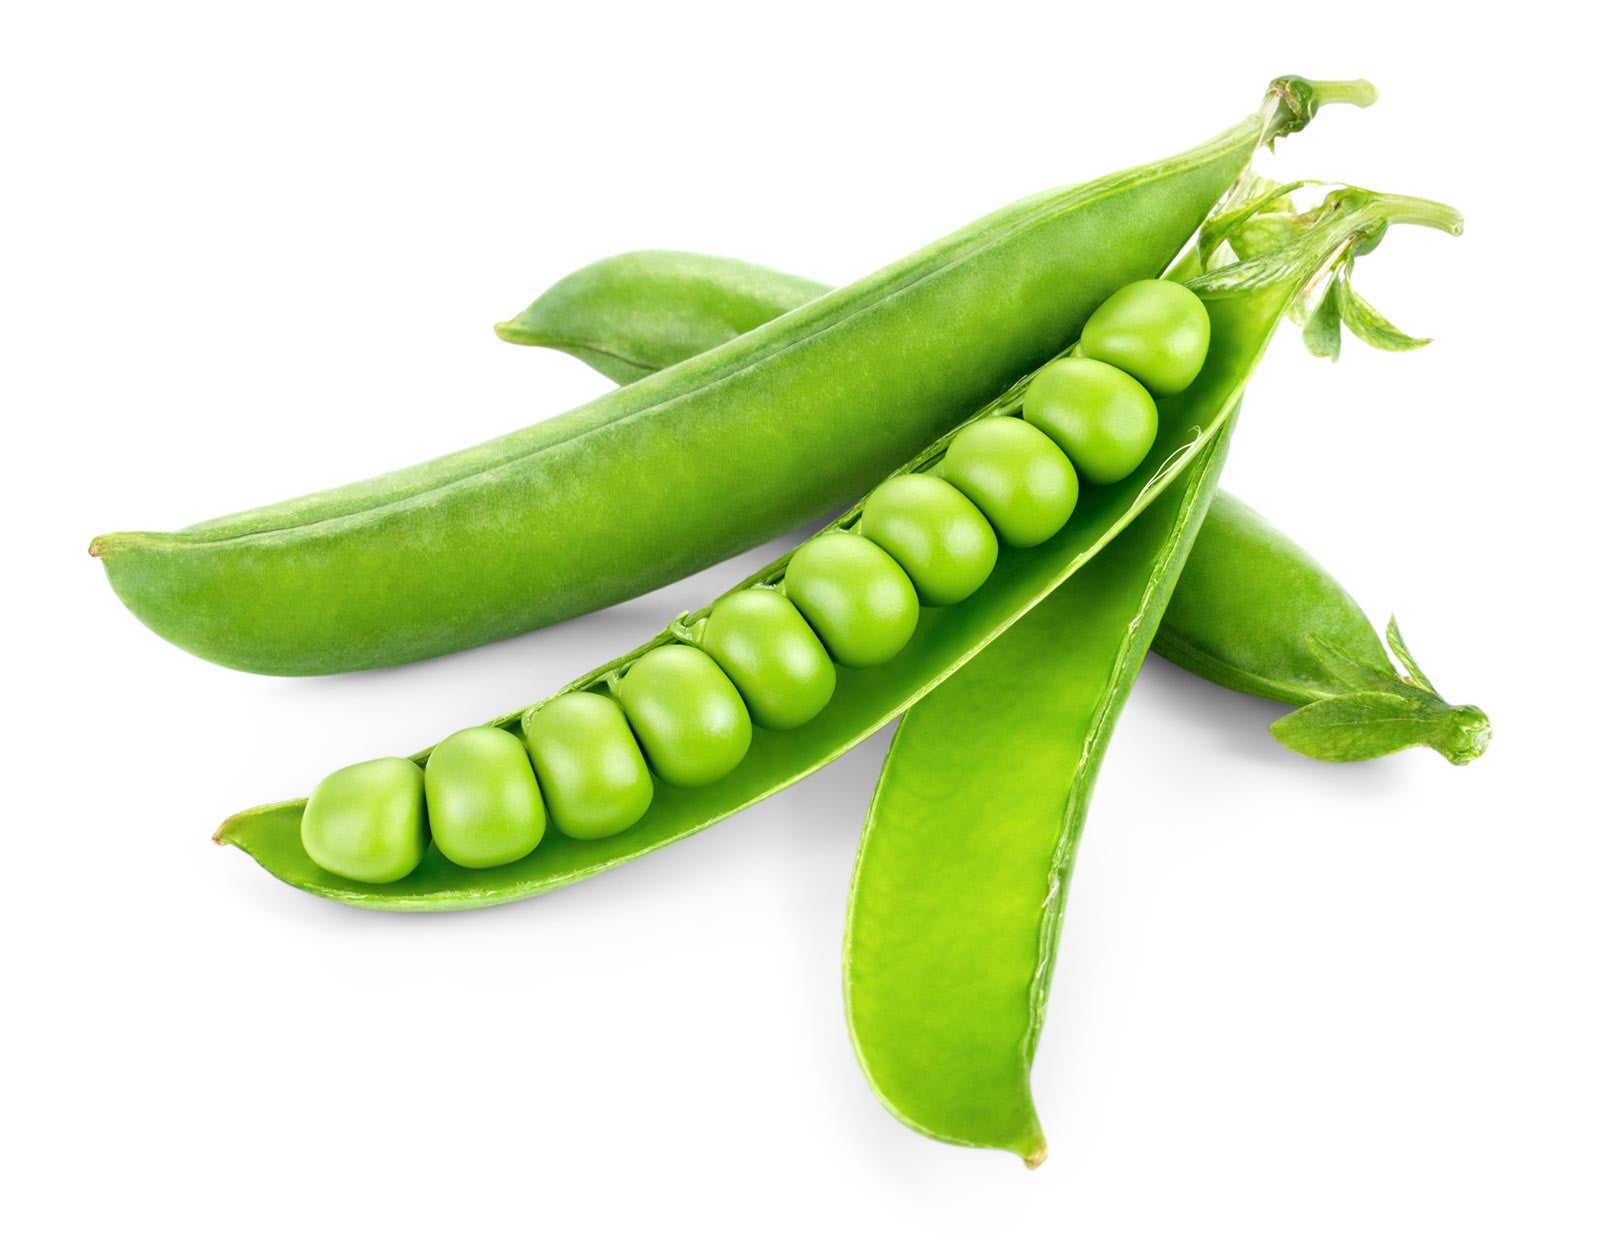 Image of Peas seeds free to use